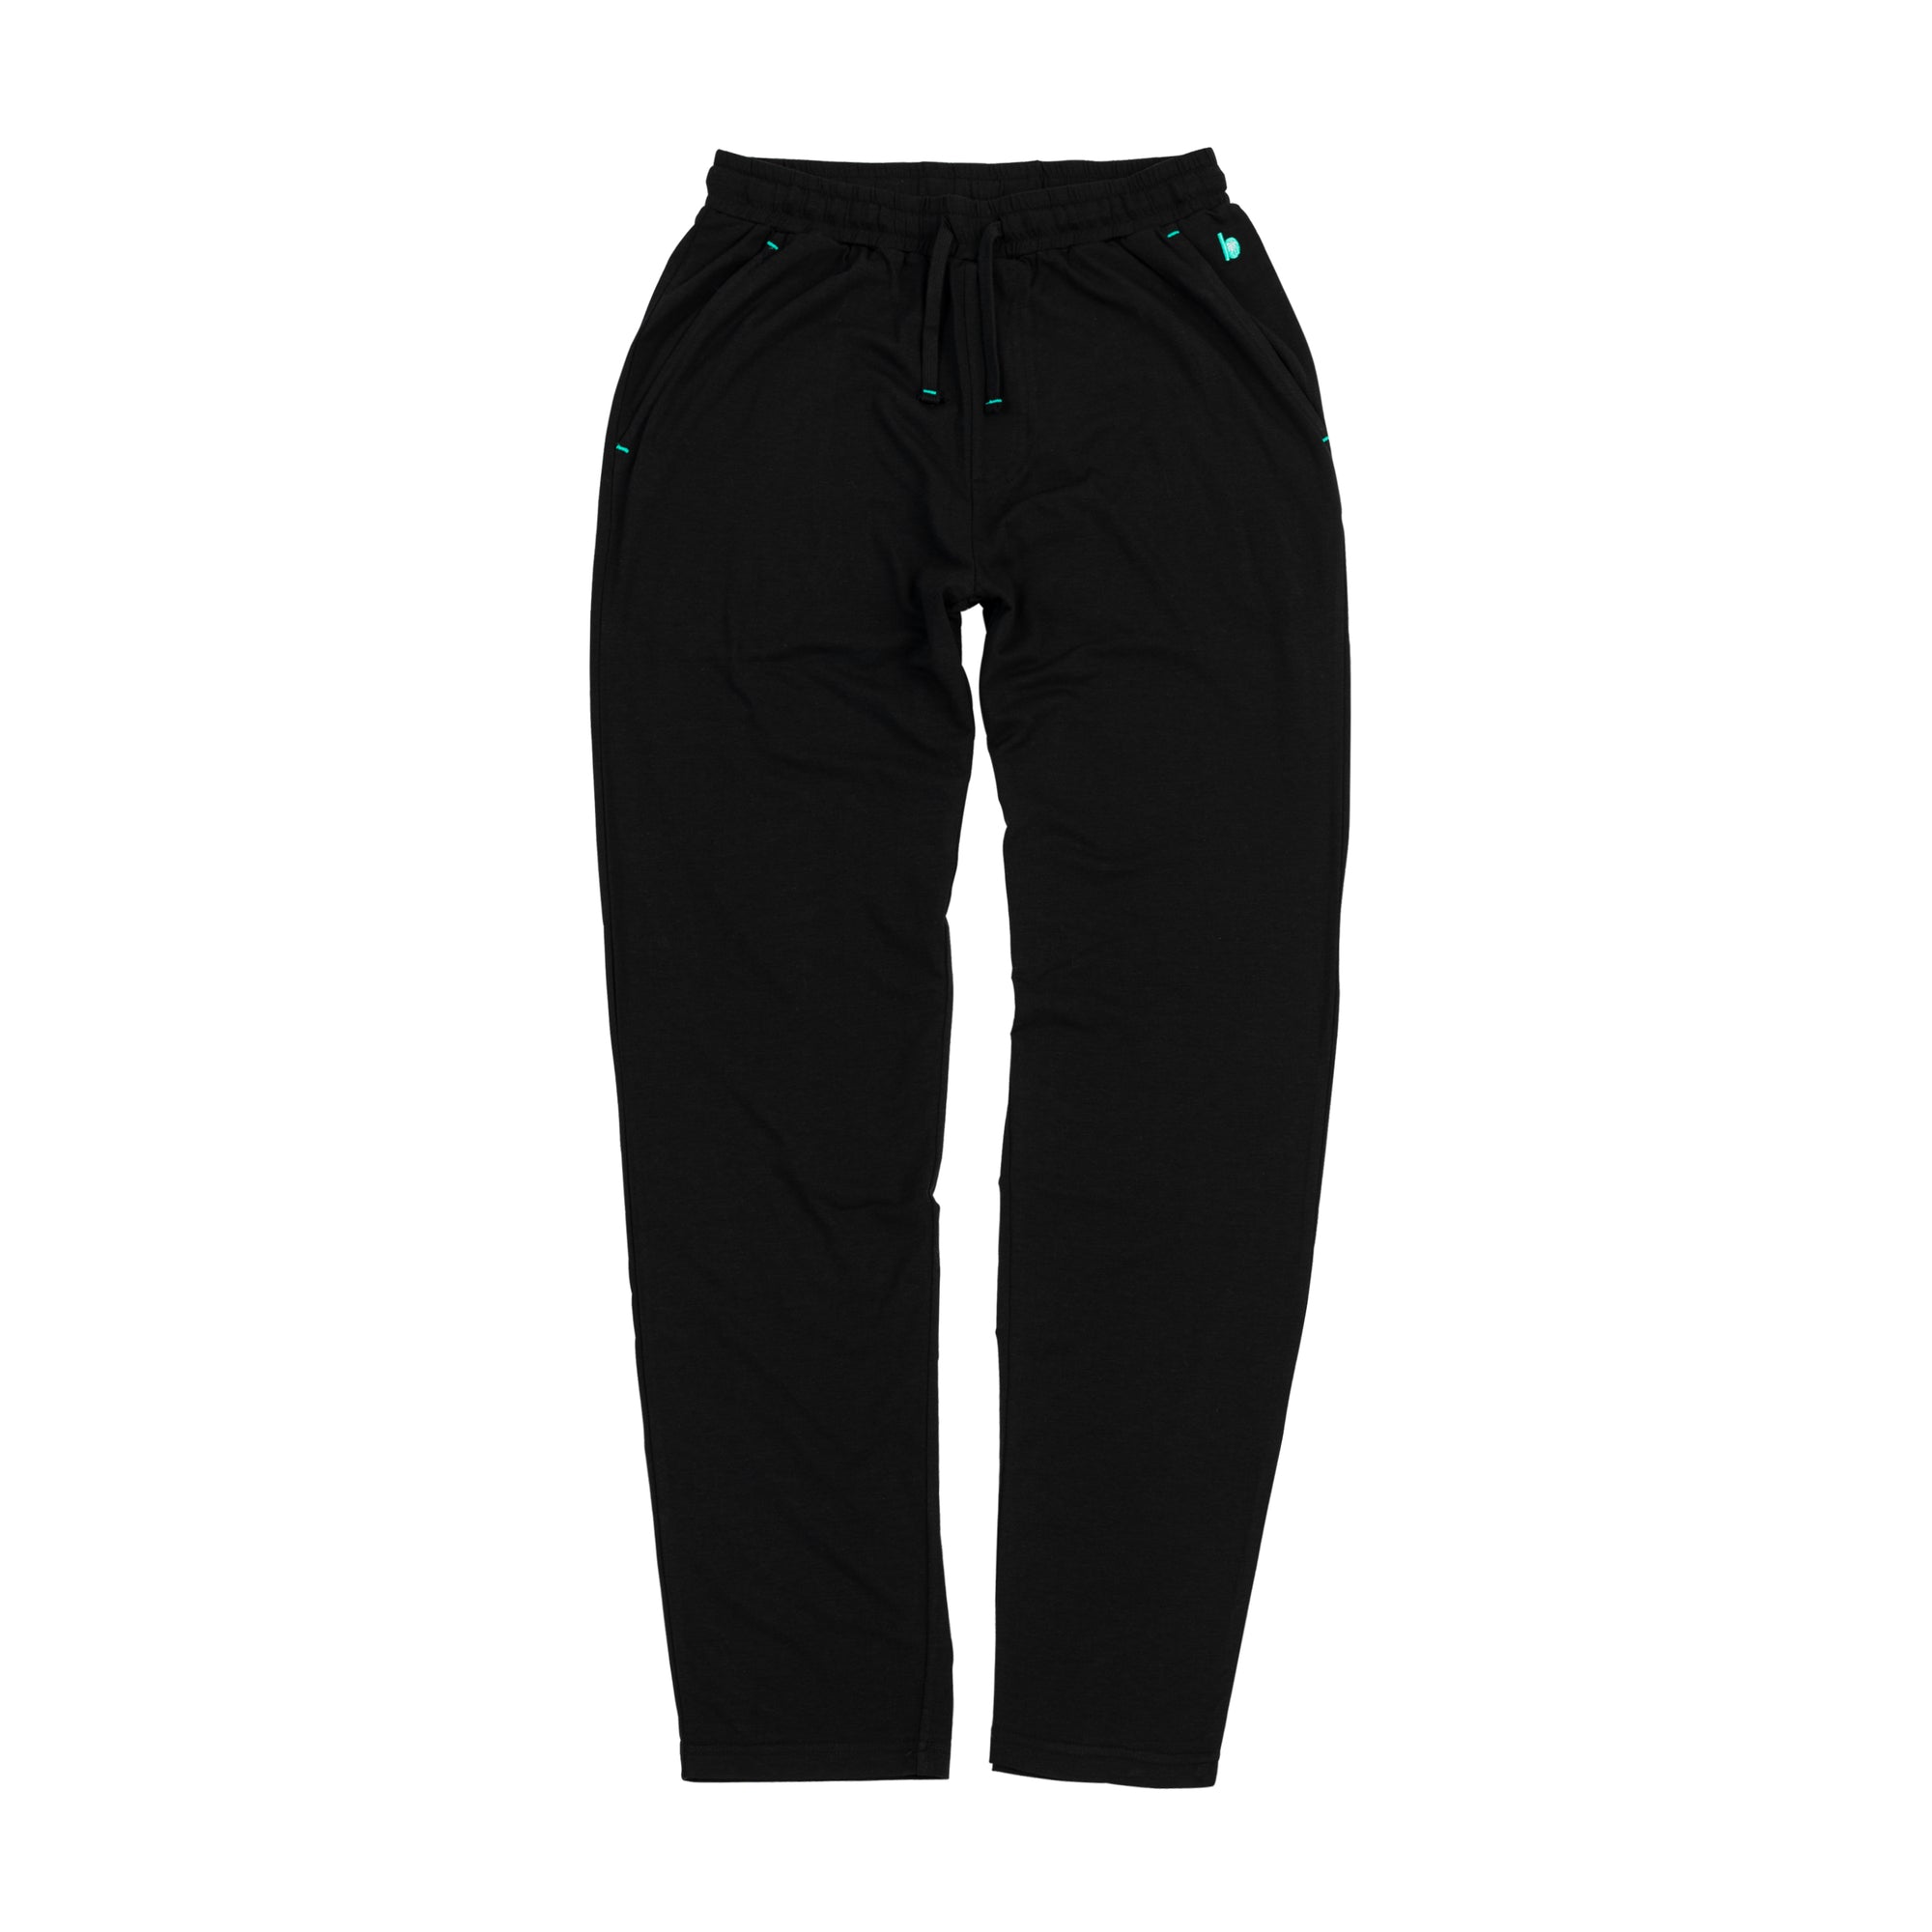 Pants Sleepwear - Black